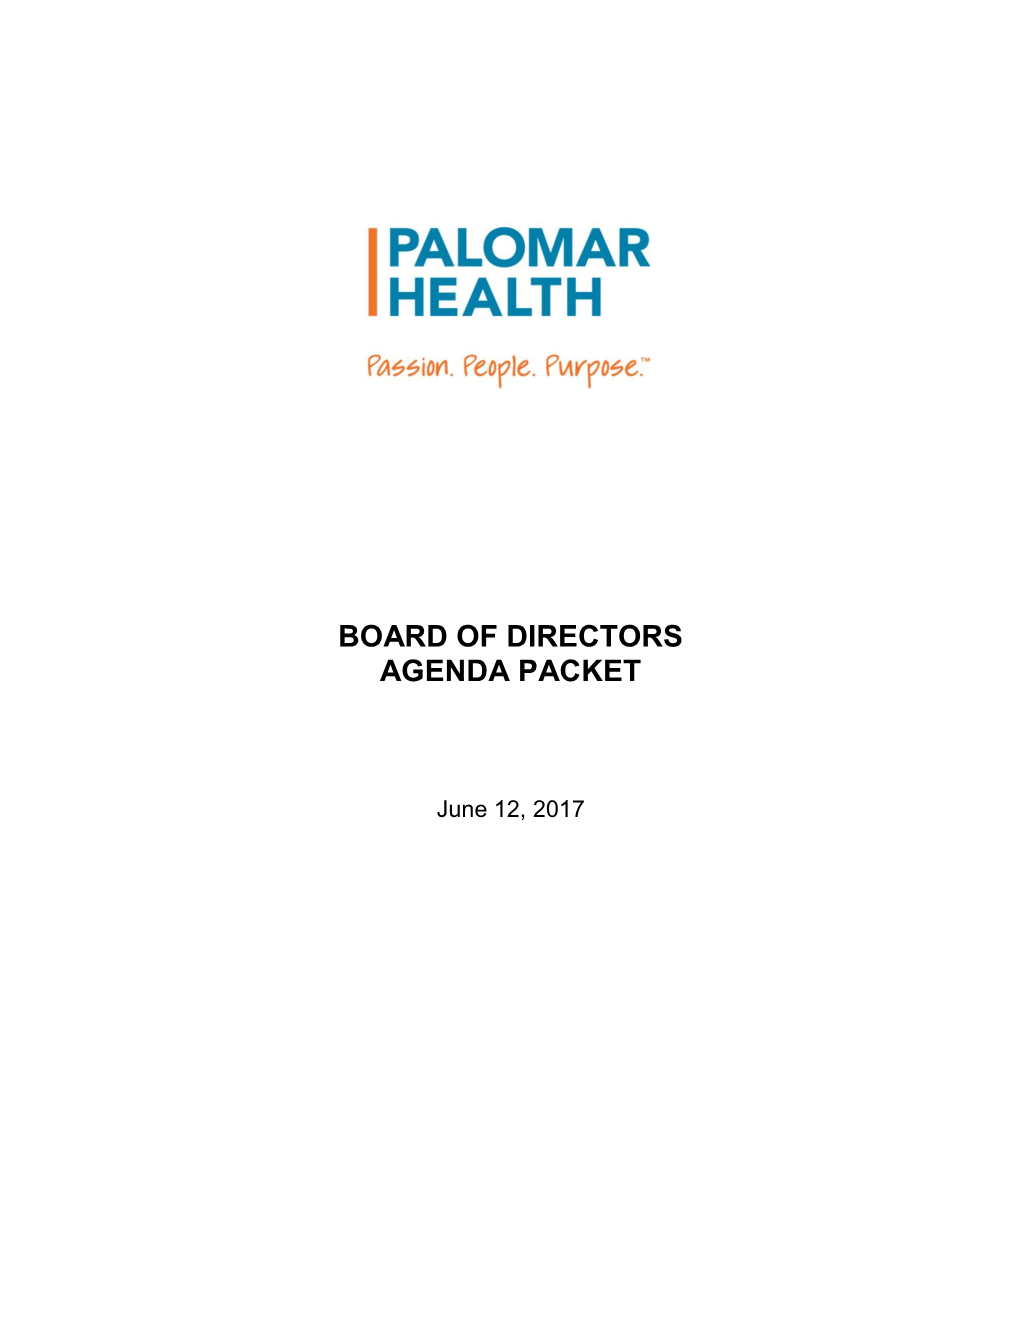 Board of Directors Agenda Packet